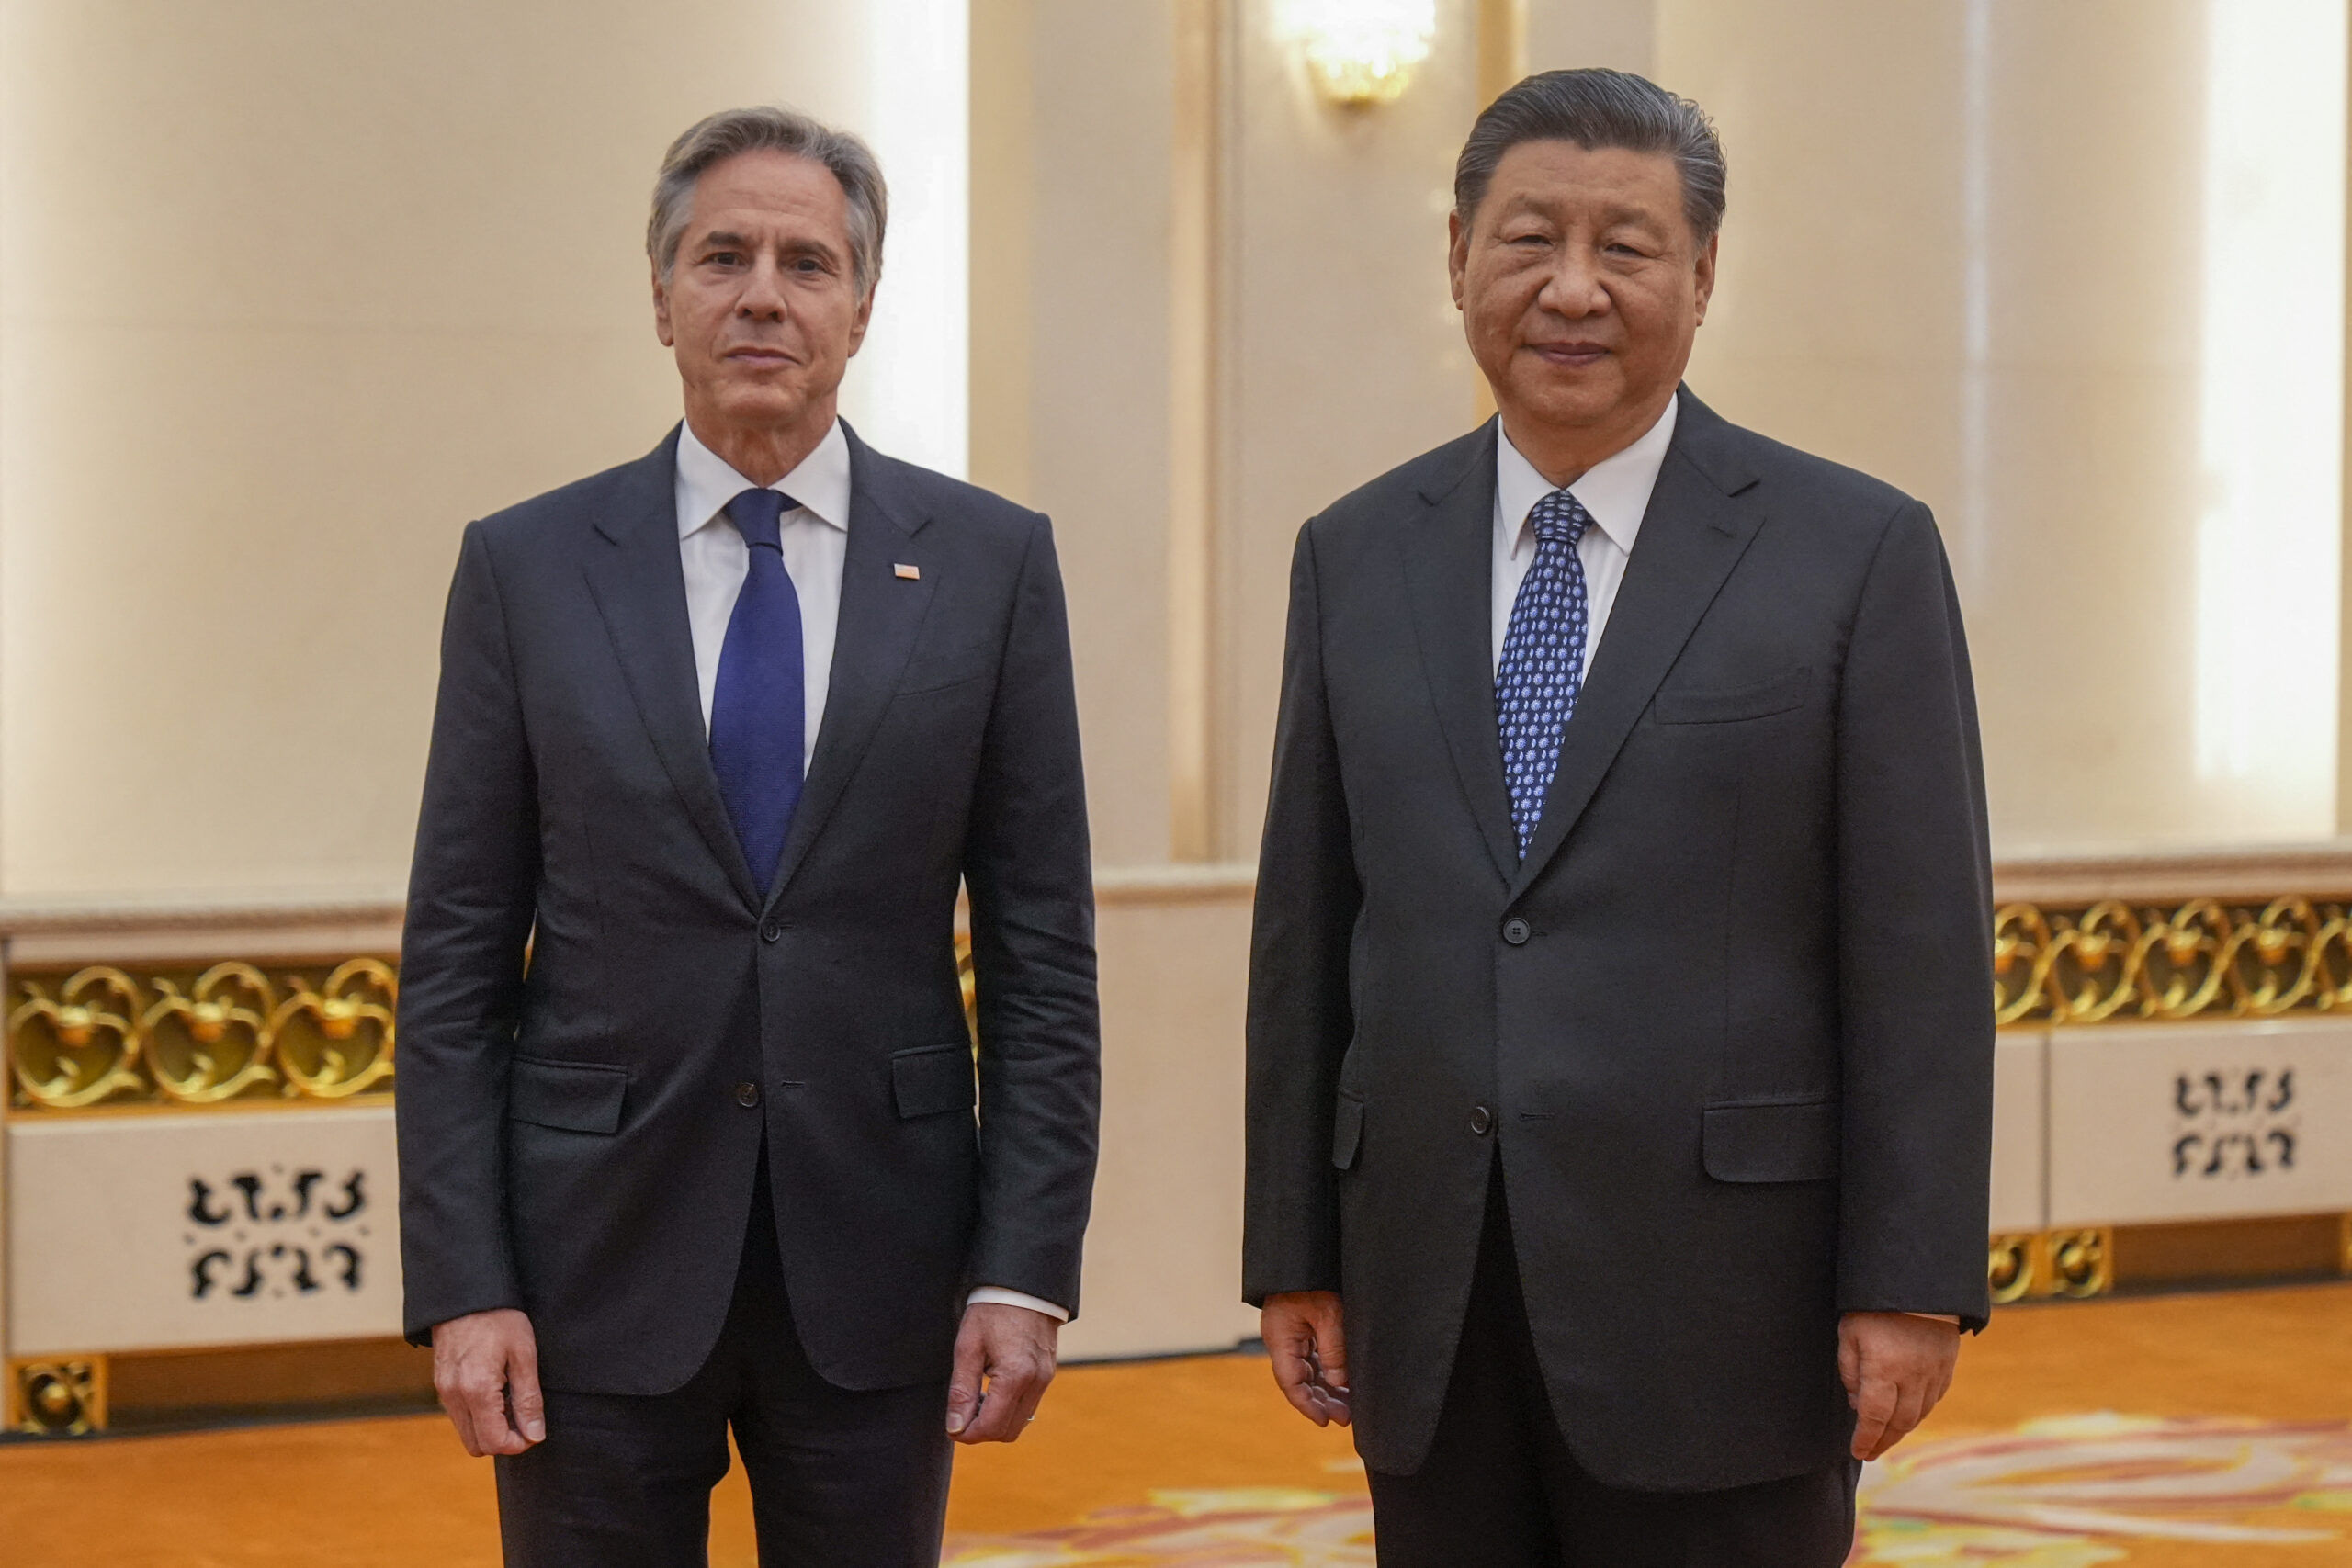 xi tells blinken us, china should be ‘partners, not rivals’